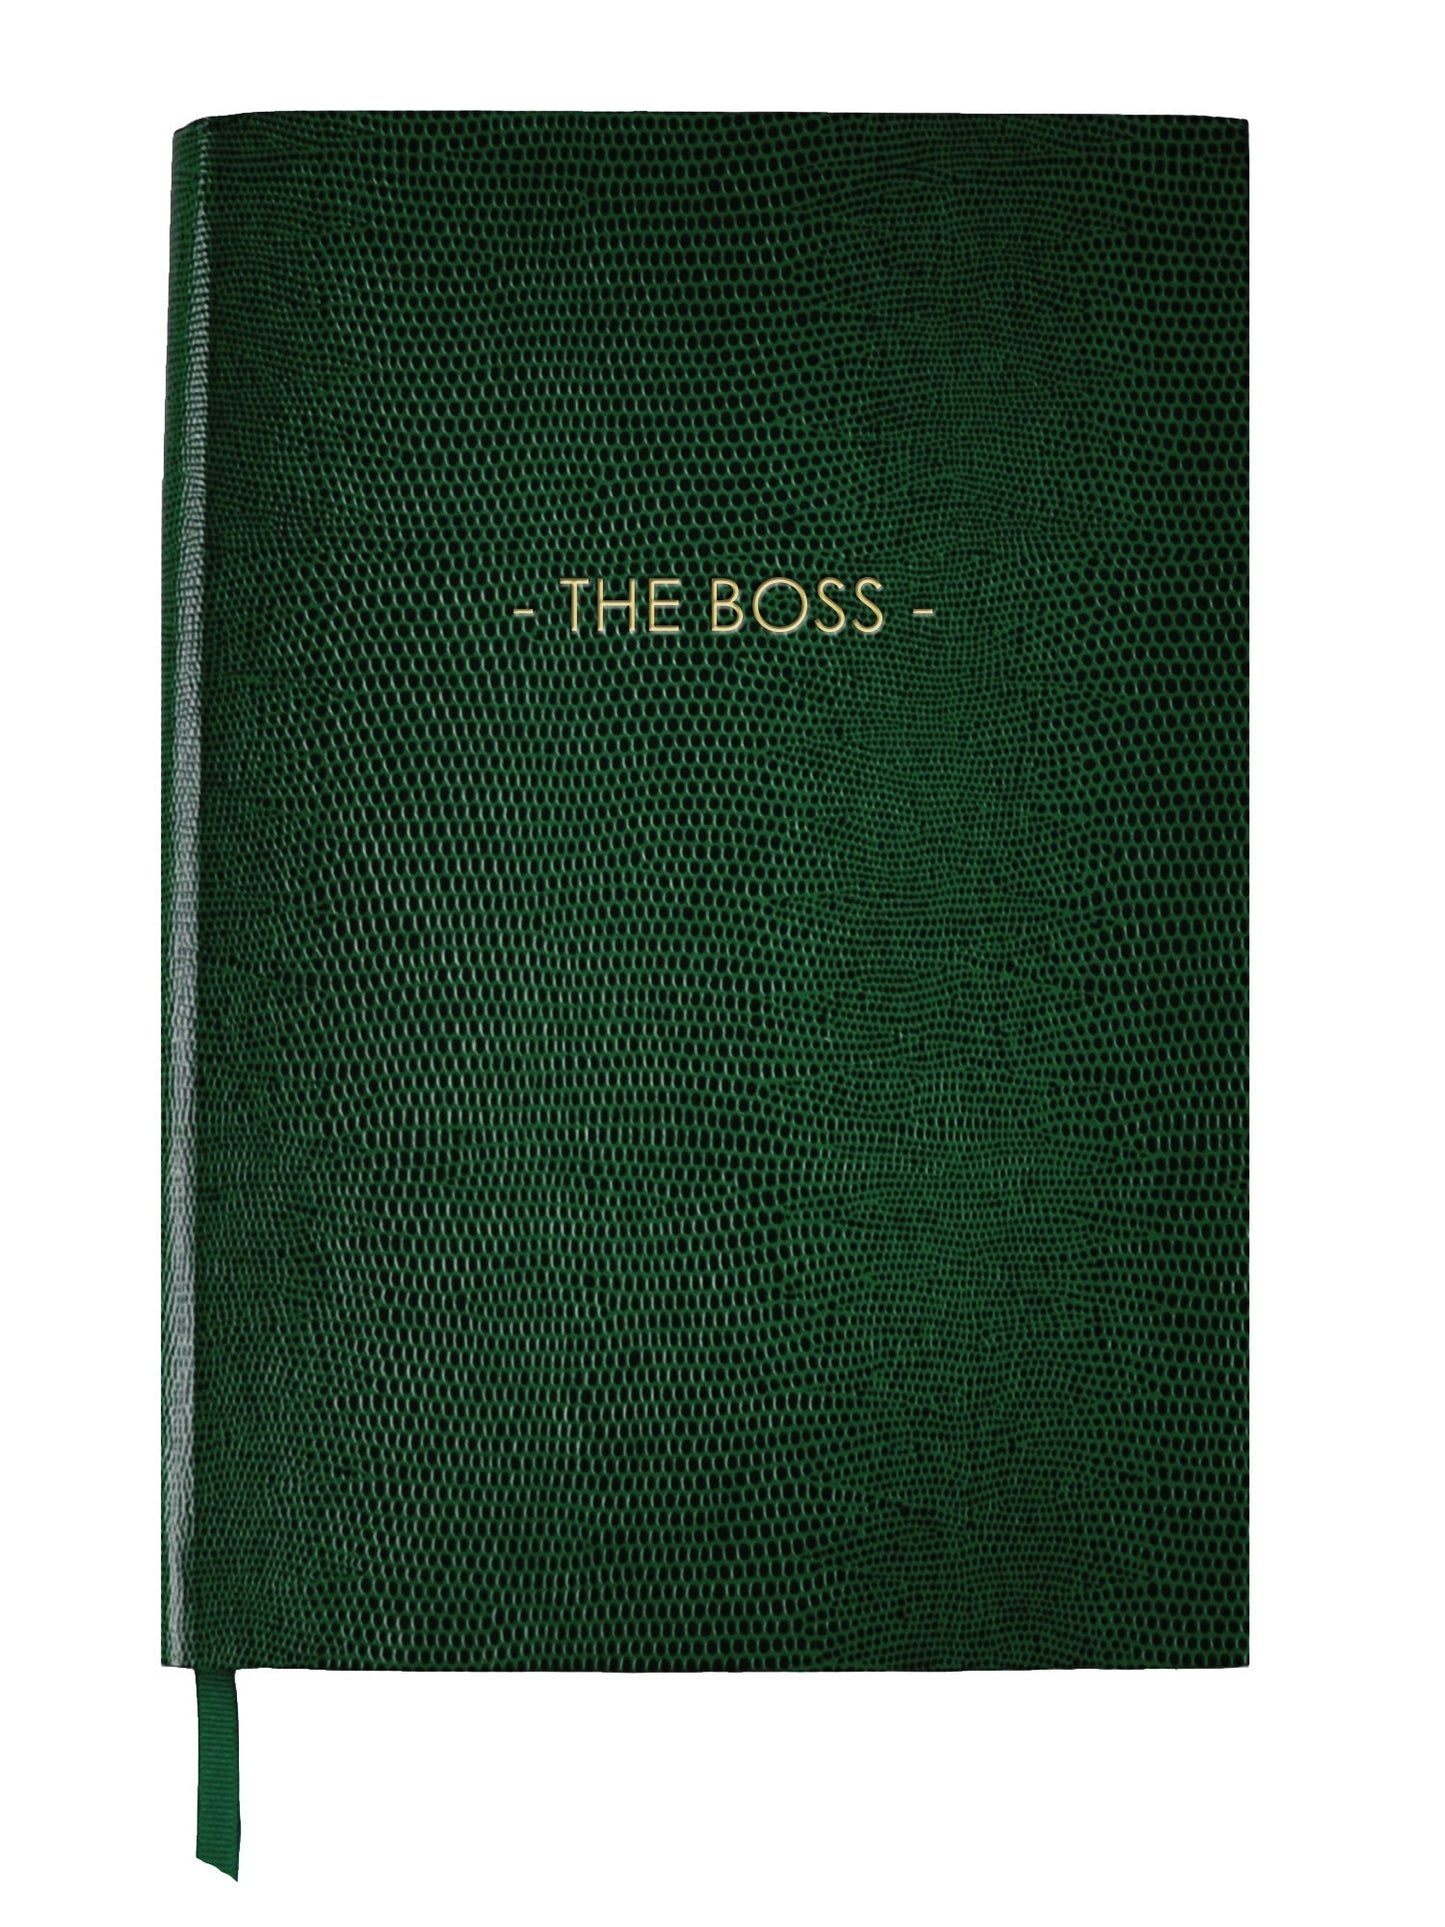 Pocket BOOK - THE BOSS